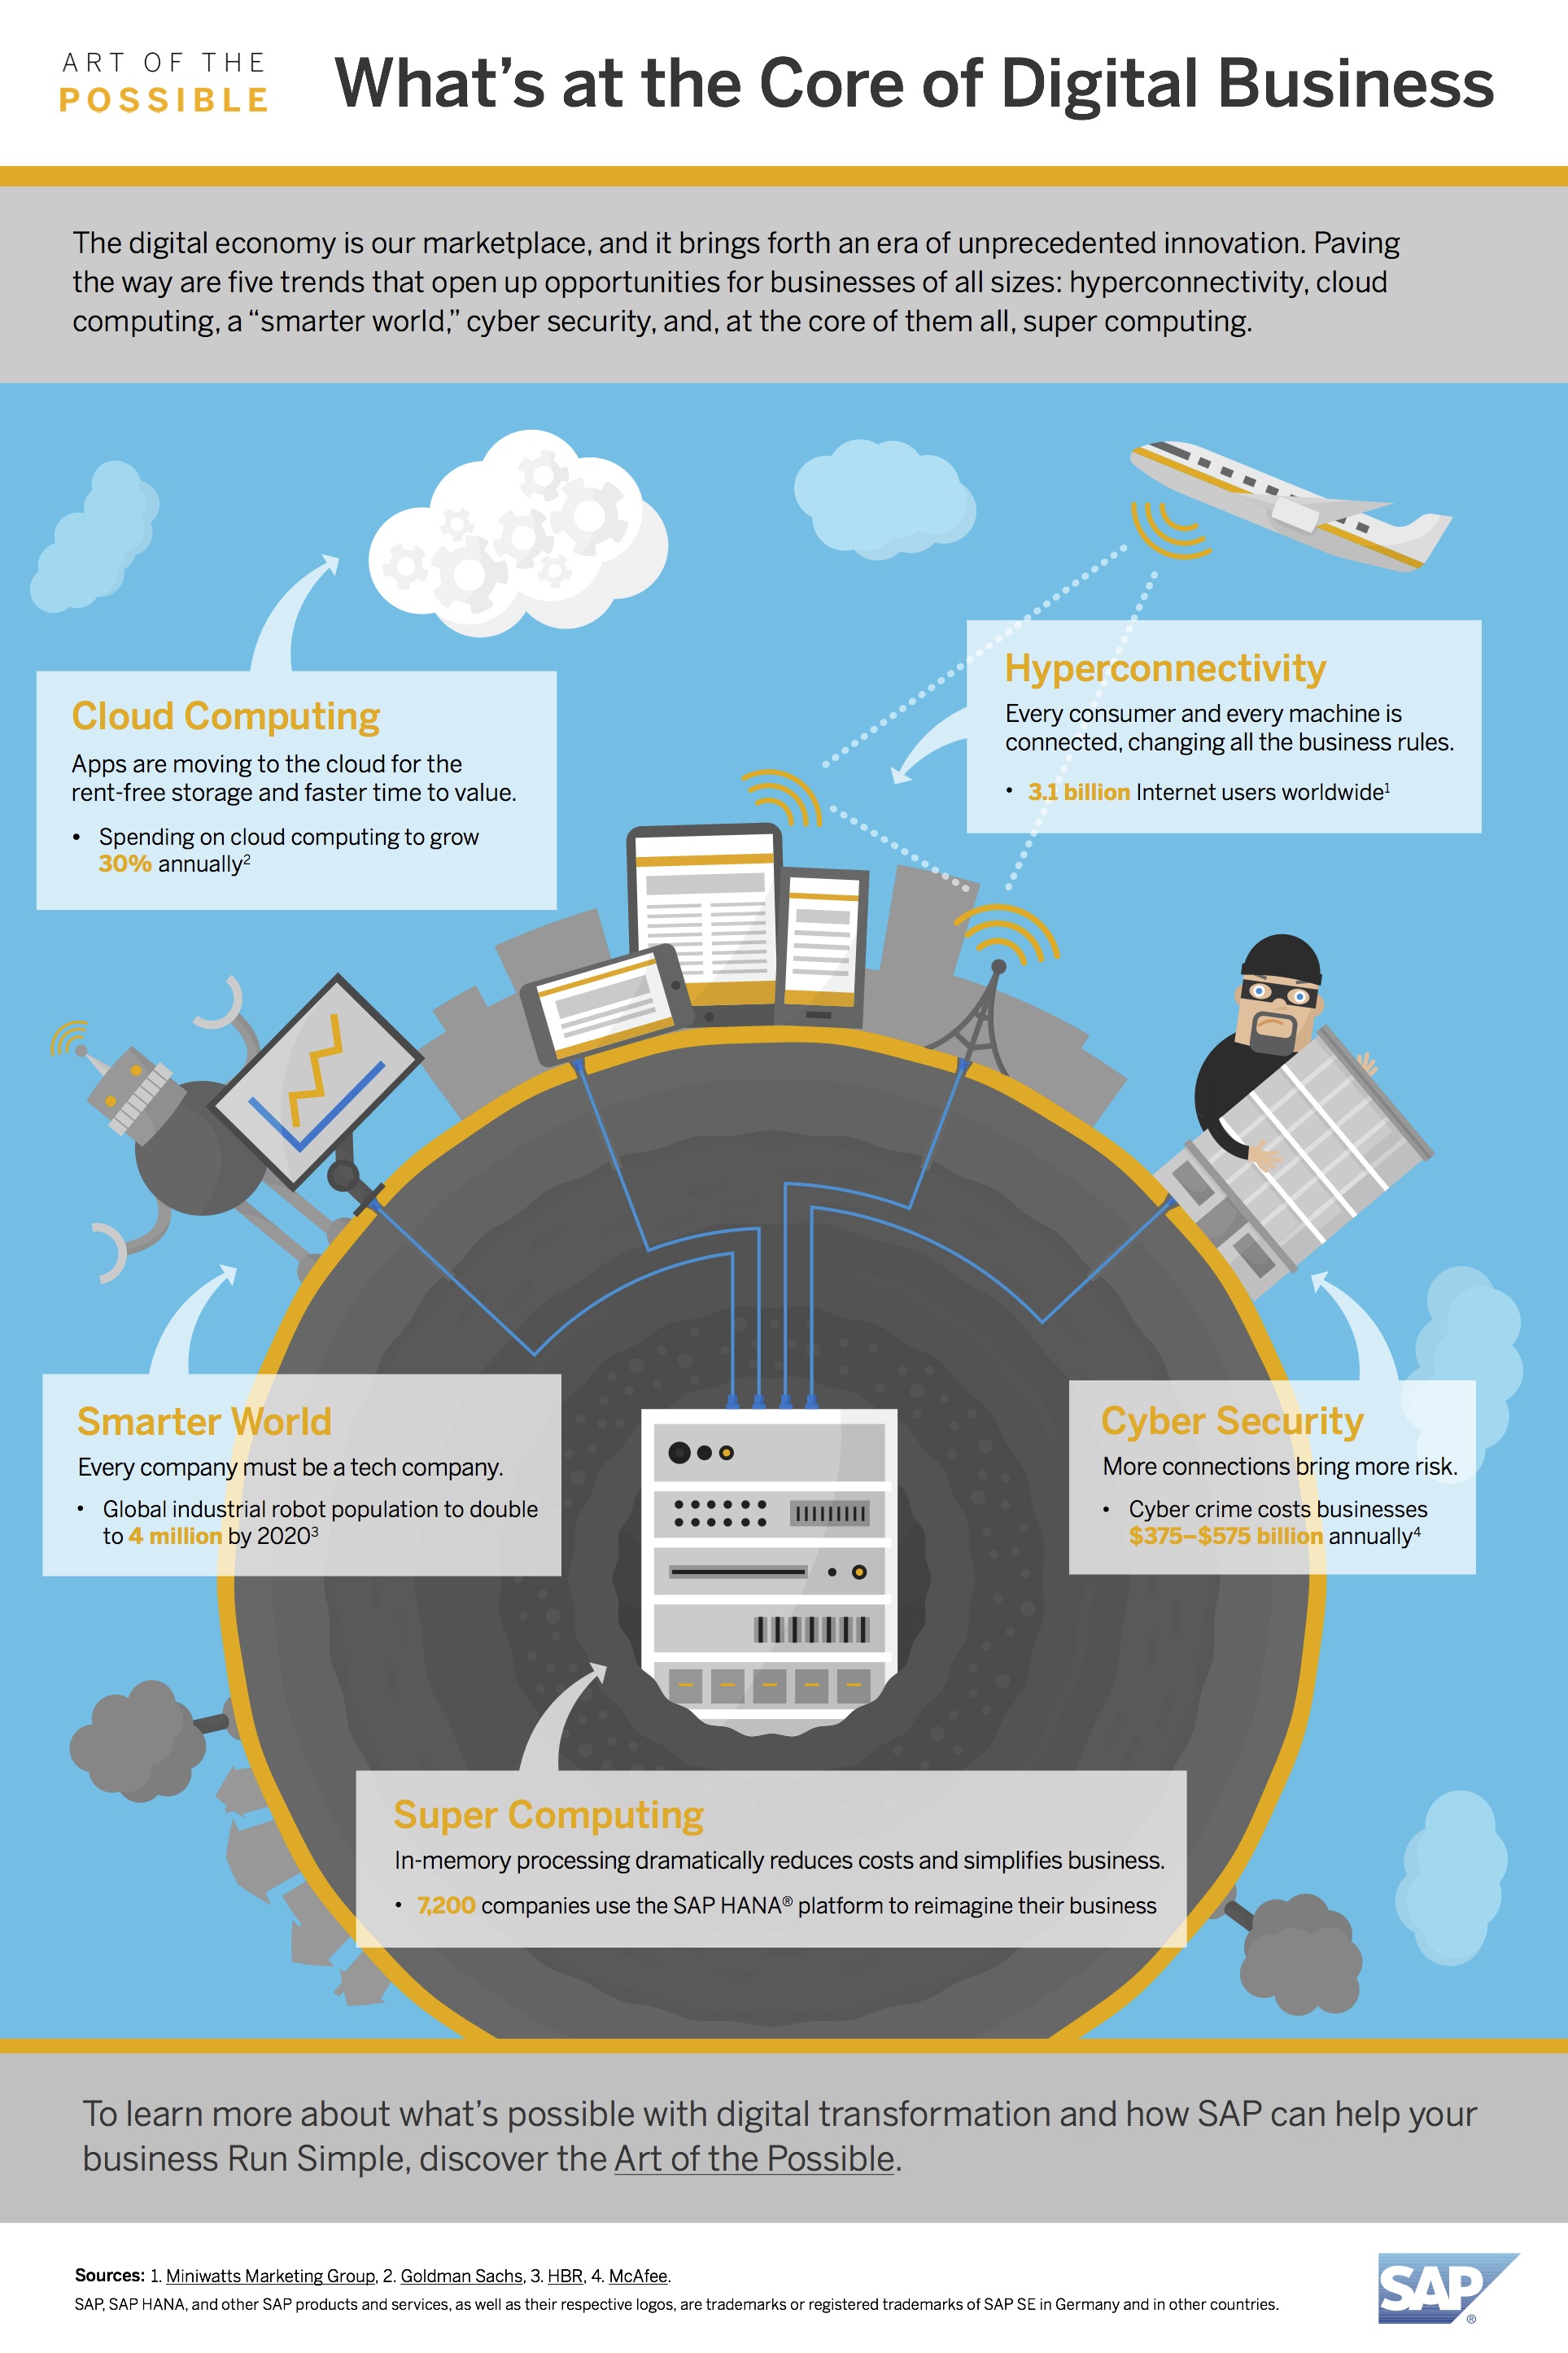 SAP-ArtOfPossible-Infographic-11-18-15.jpg